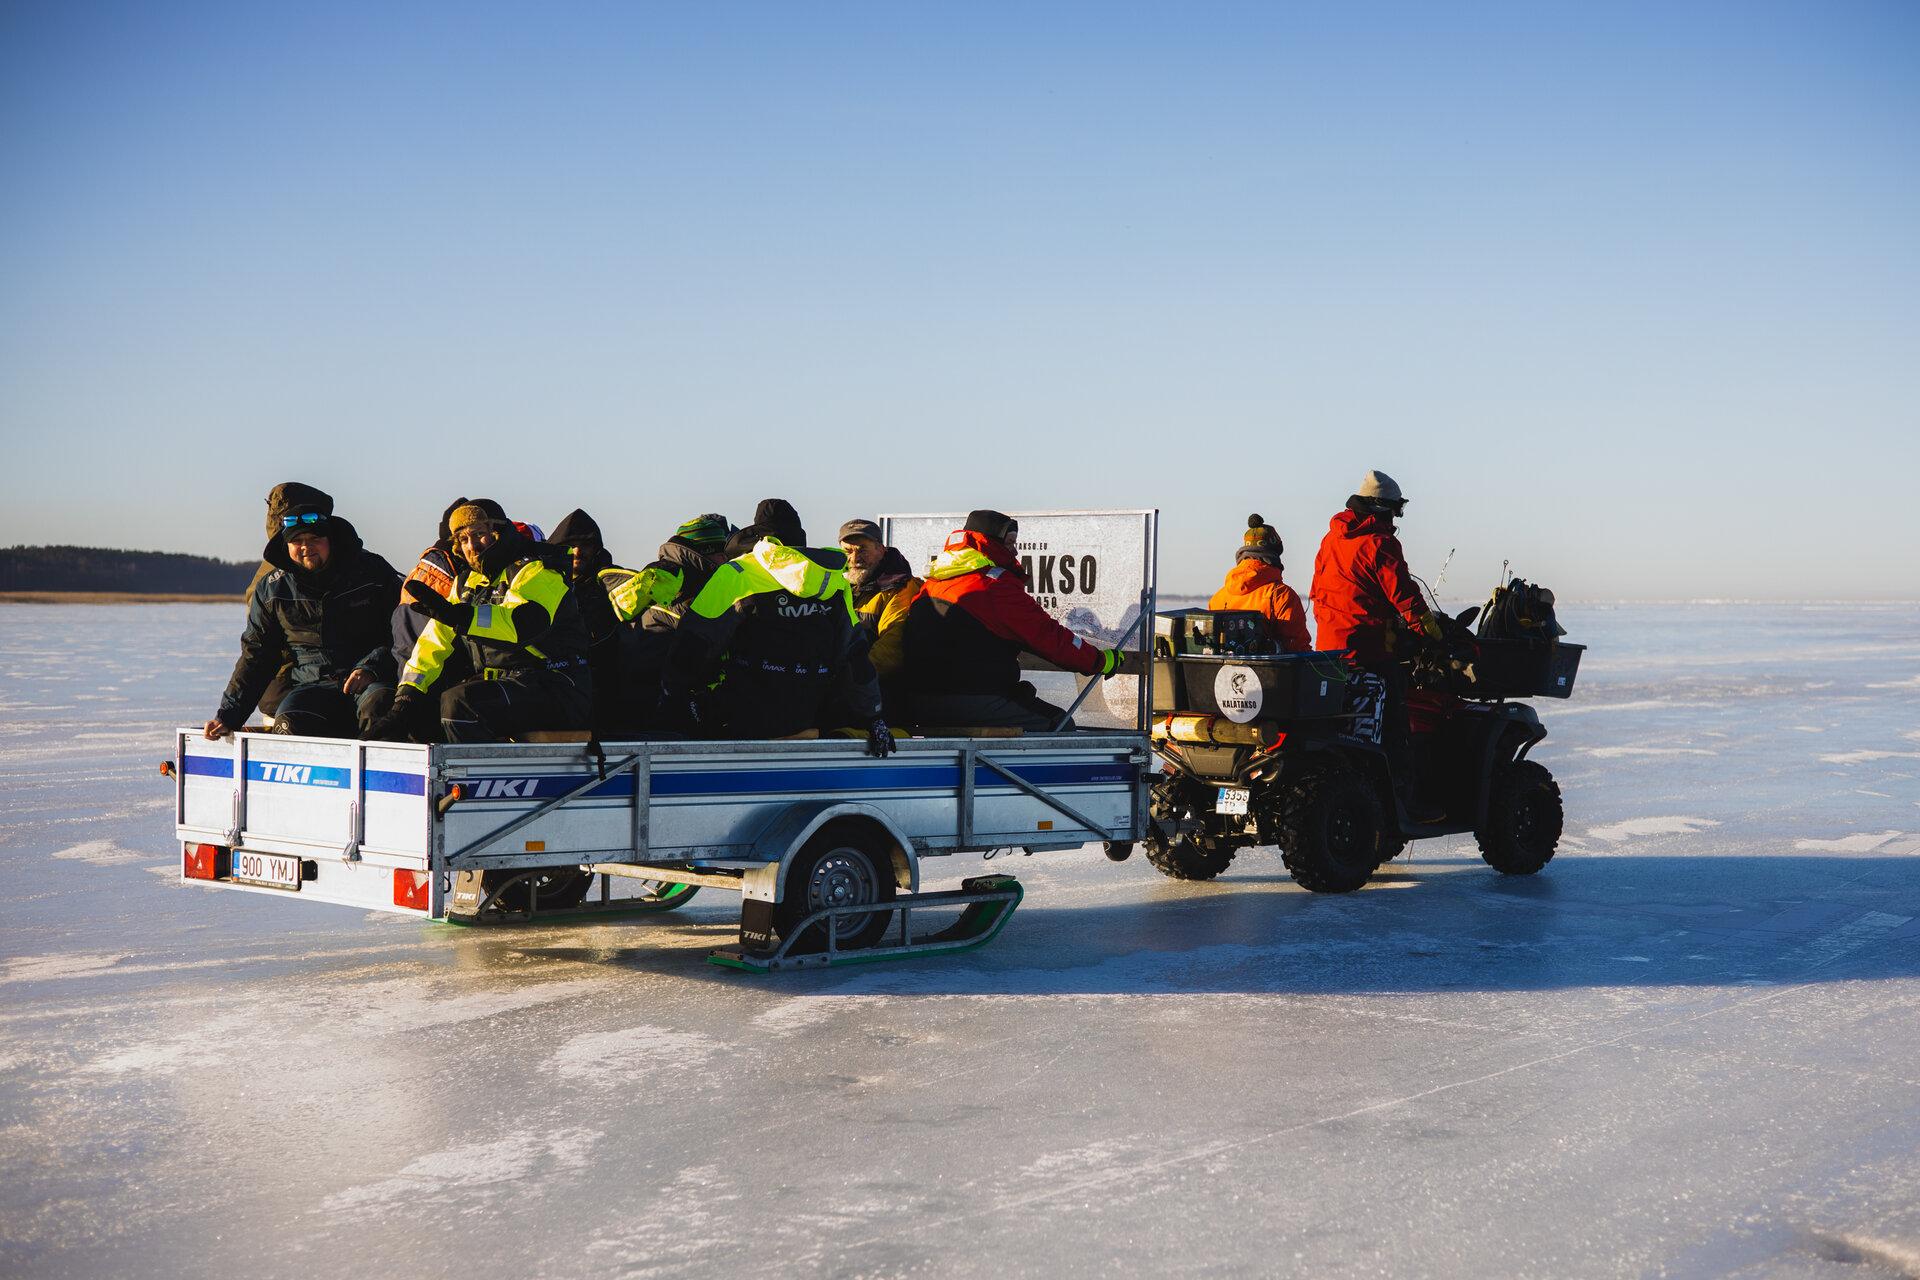 Круиз по покрытому льдом Пярнускому заливу